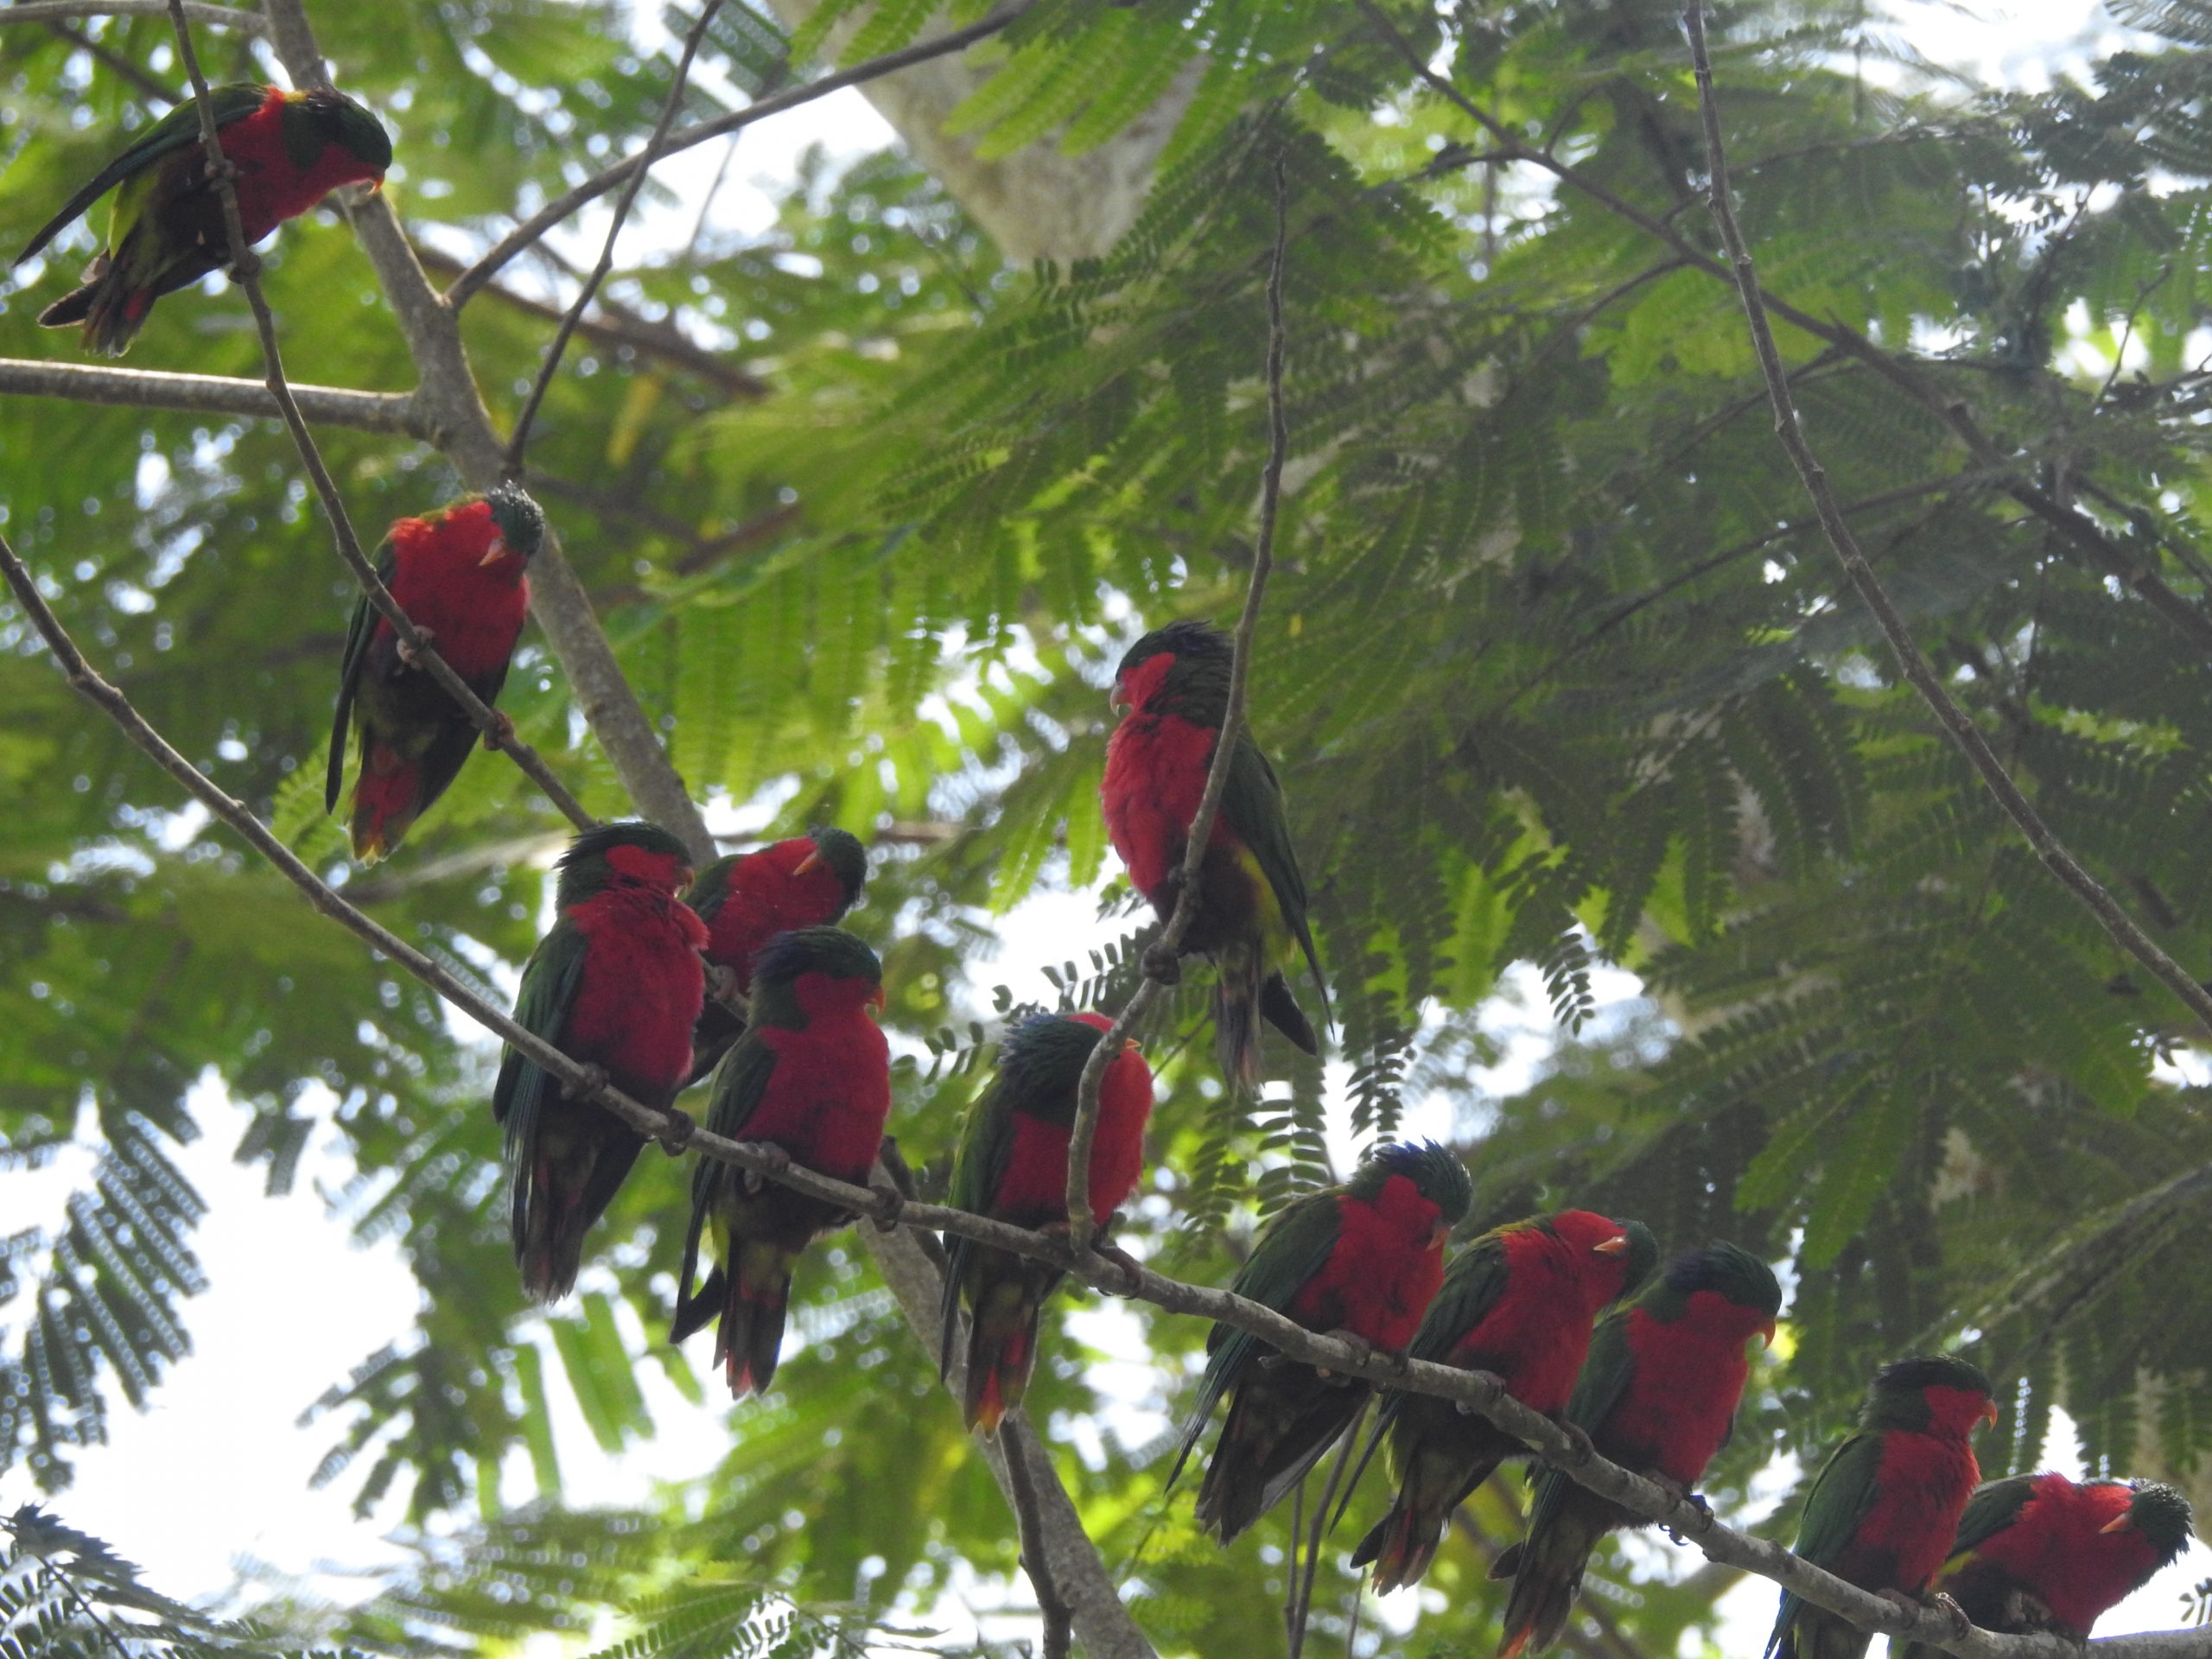 Te Ipukarea Society: Parrot pandemonium- Celebrating the world’s most talkative birds